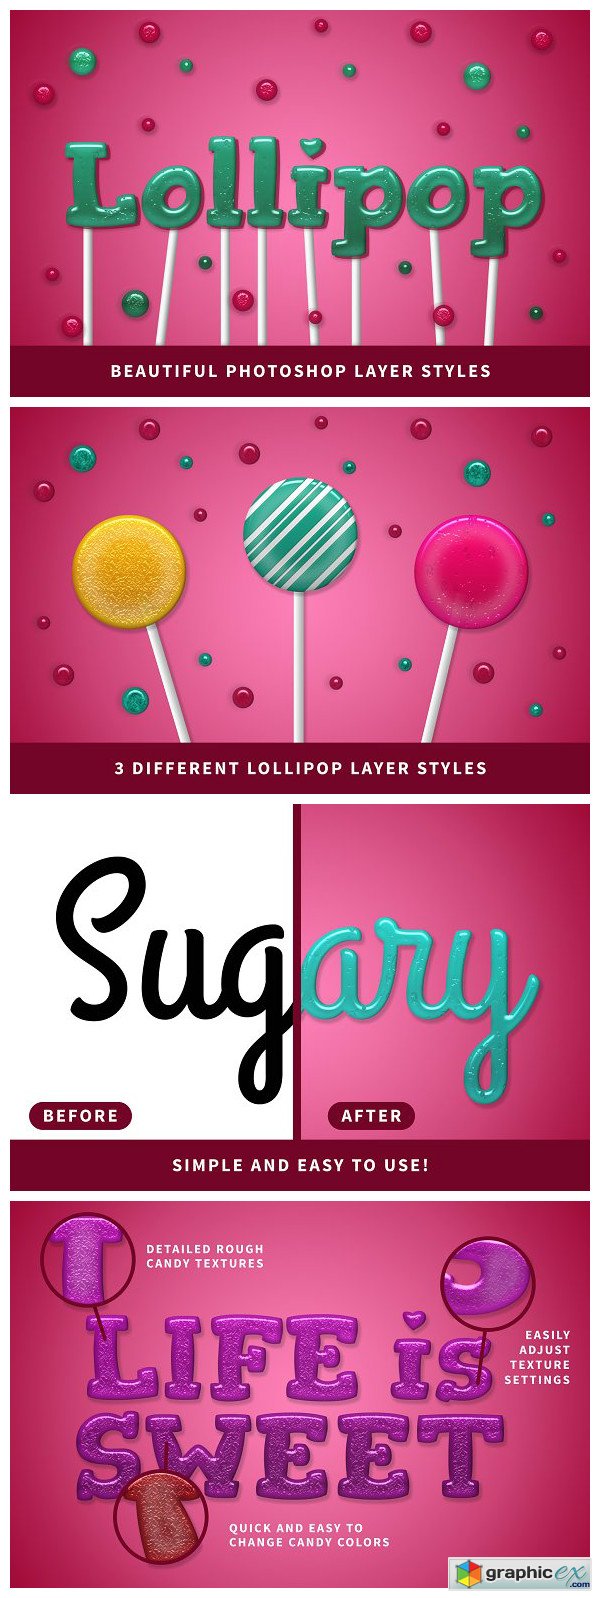 Lollipop Photoshop Layer Styles